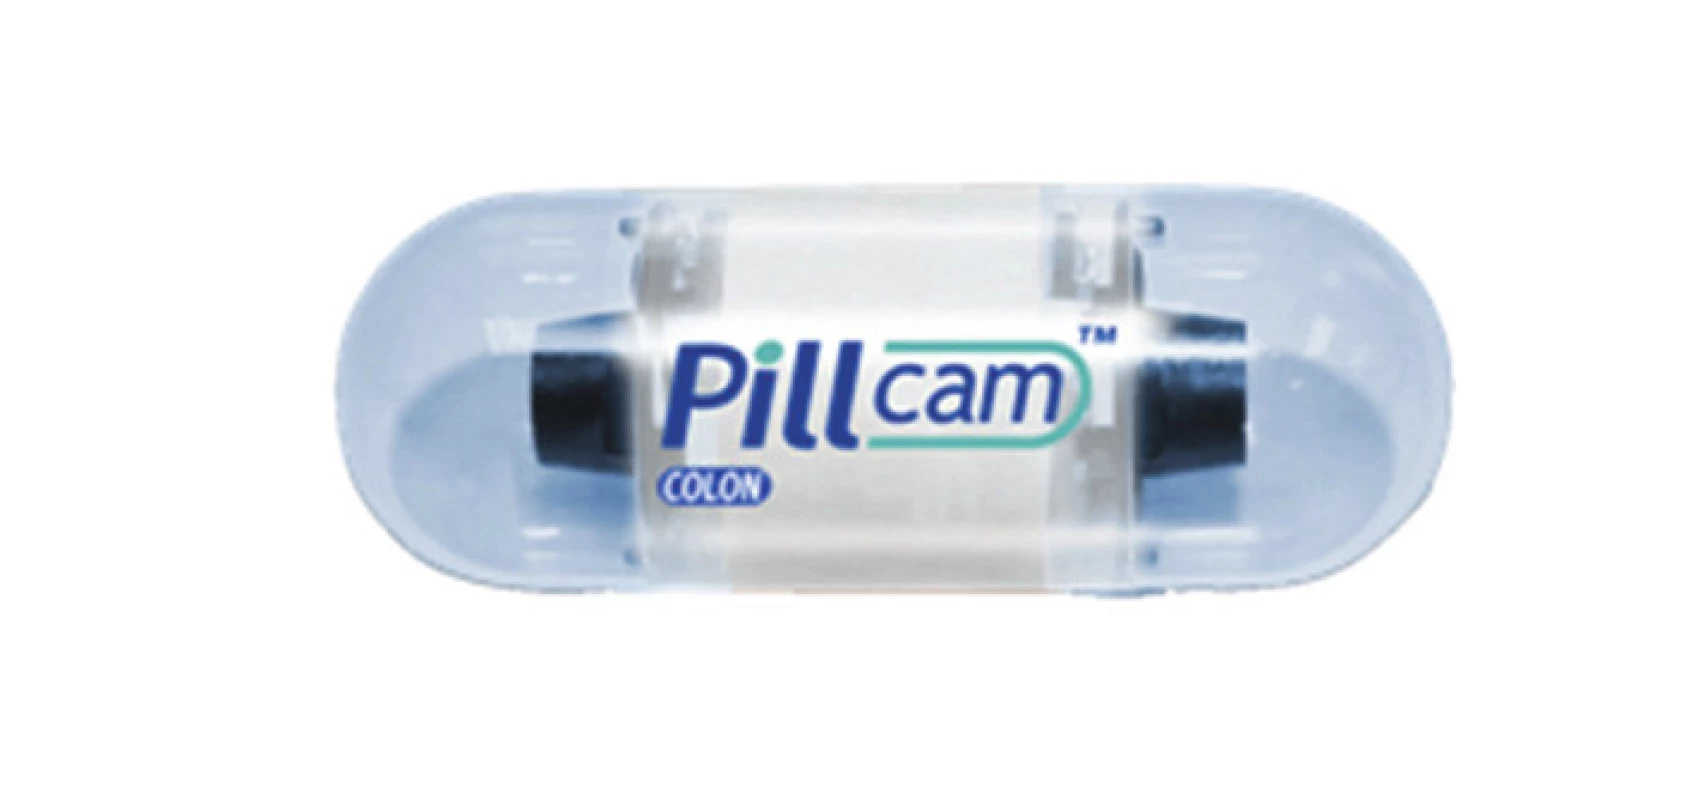 Druhá generace kolonické kapsle PillCam &lt;sup&gt;®&lt;/sup&gt;
Fig. 1: Second generation of the PillCam&lt;sup&gt;®&lt;/sup&gt;colon capsule